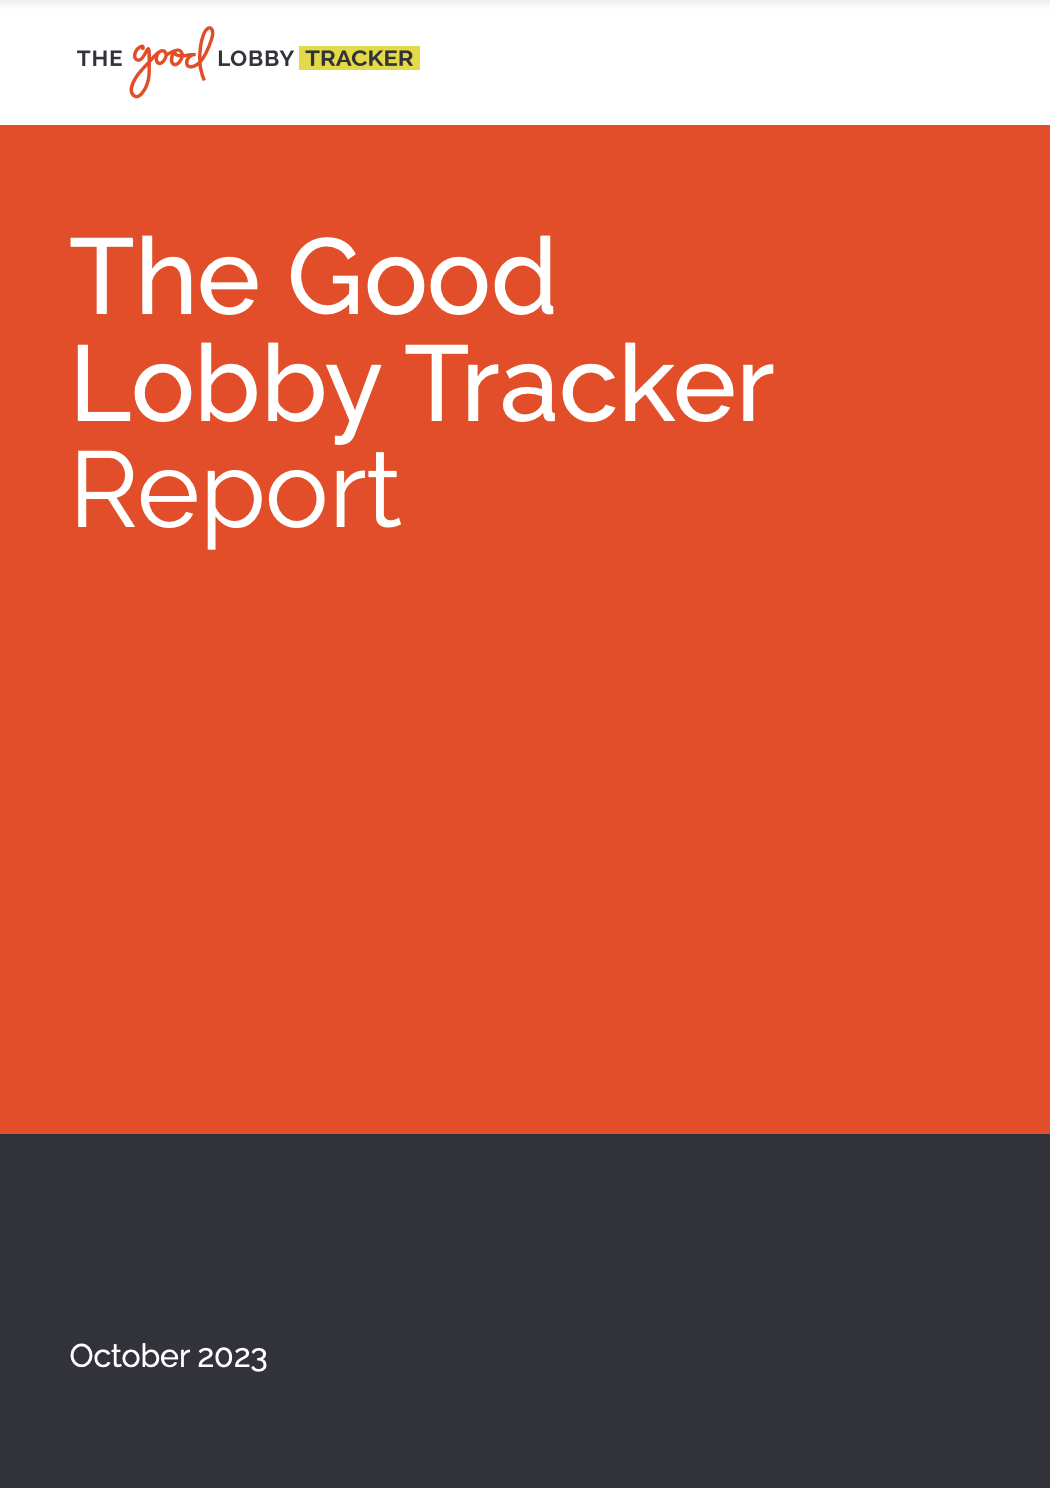 The Good Lobby Tracker cover